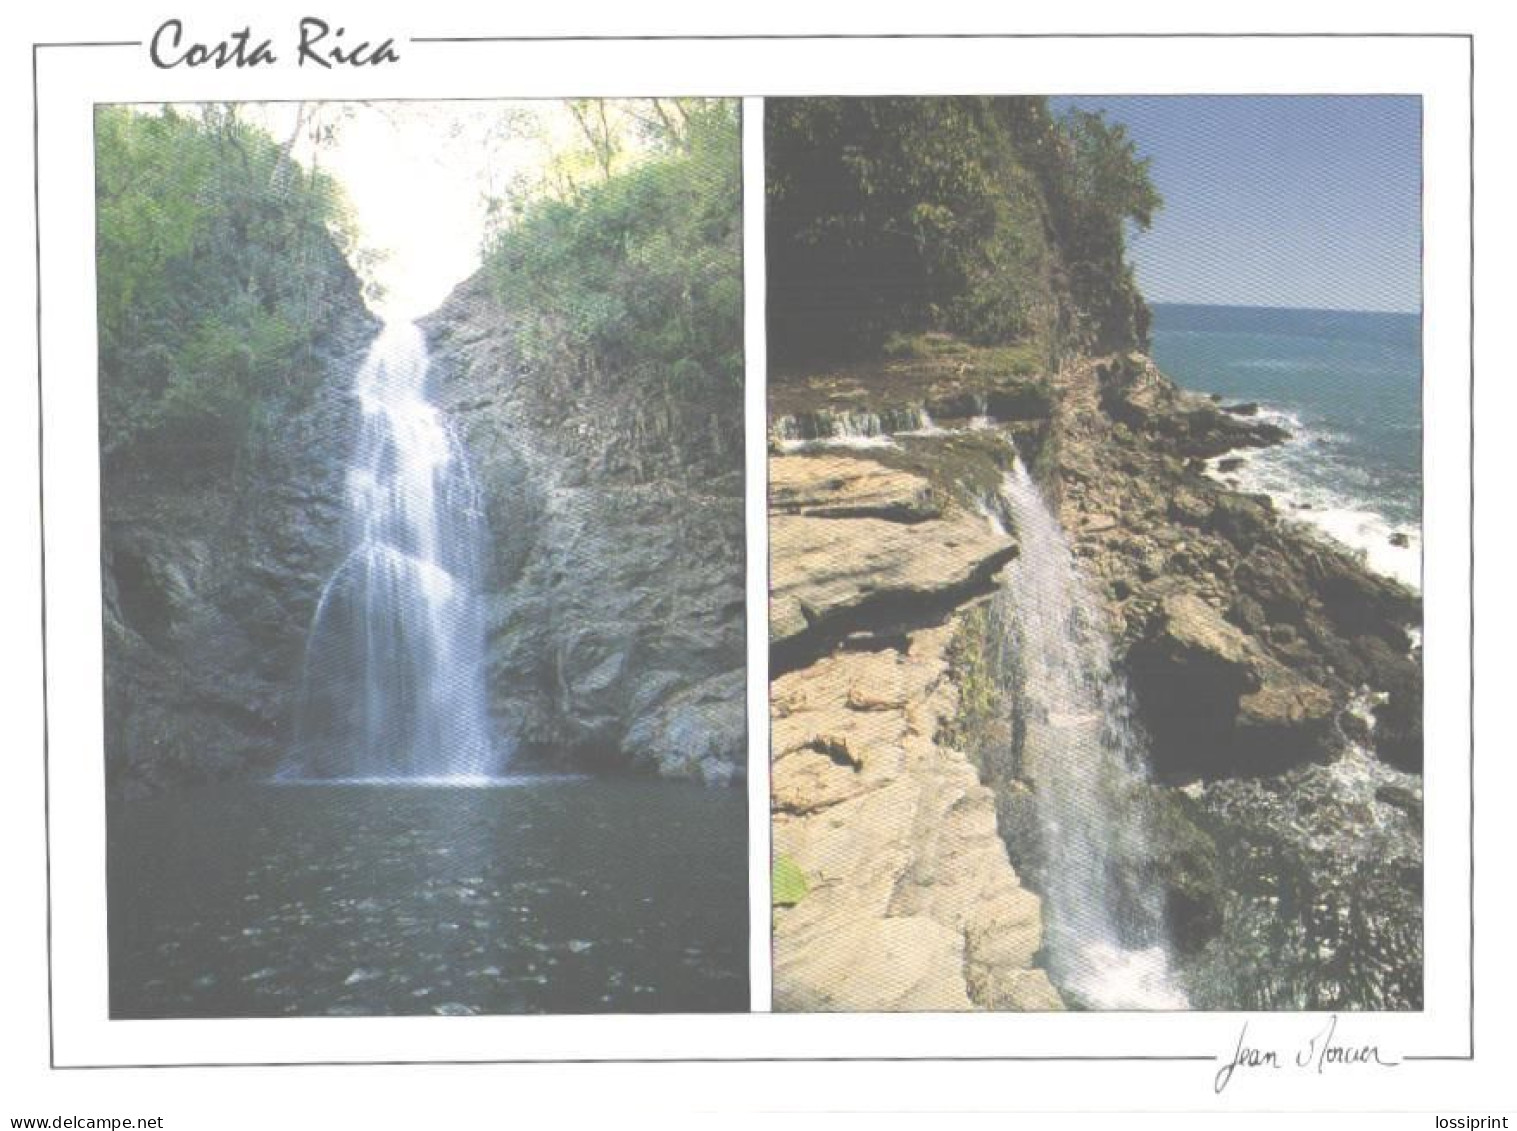 Costa Rica:Montezuma Waterfalls - Costa Rica